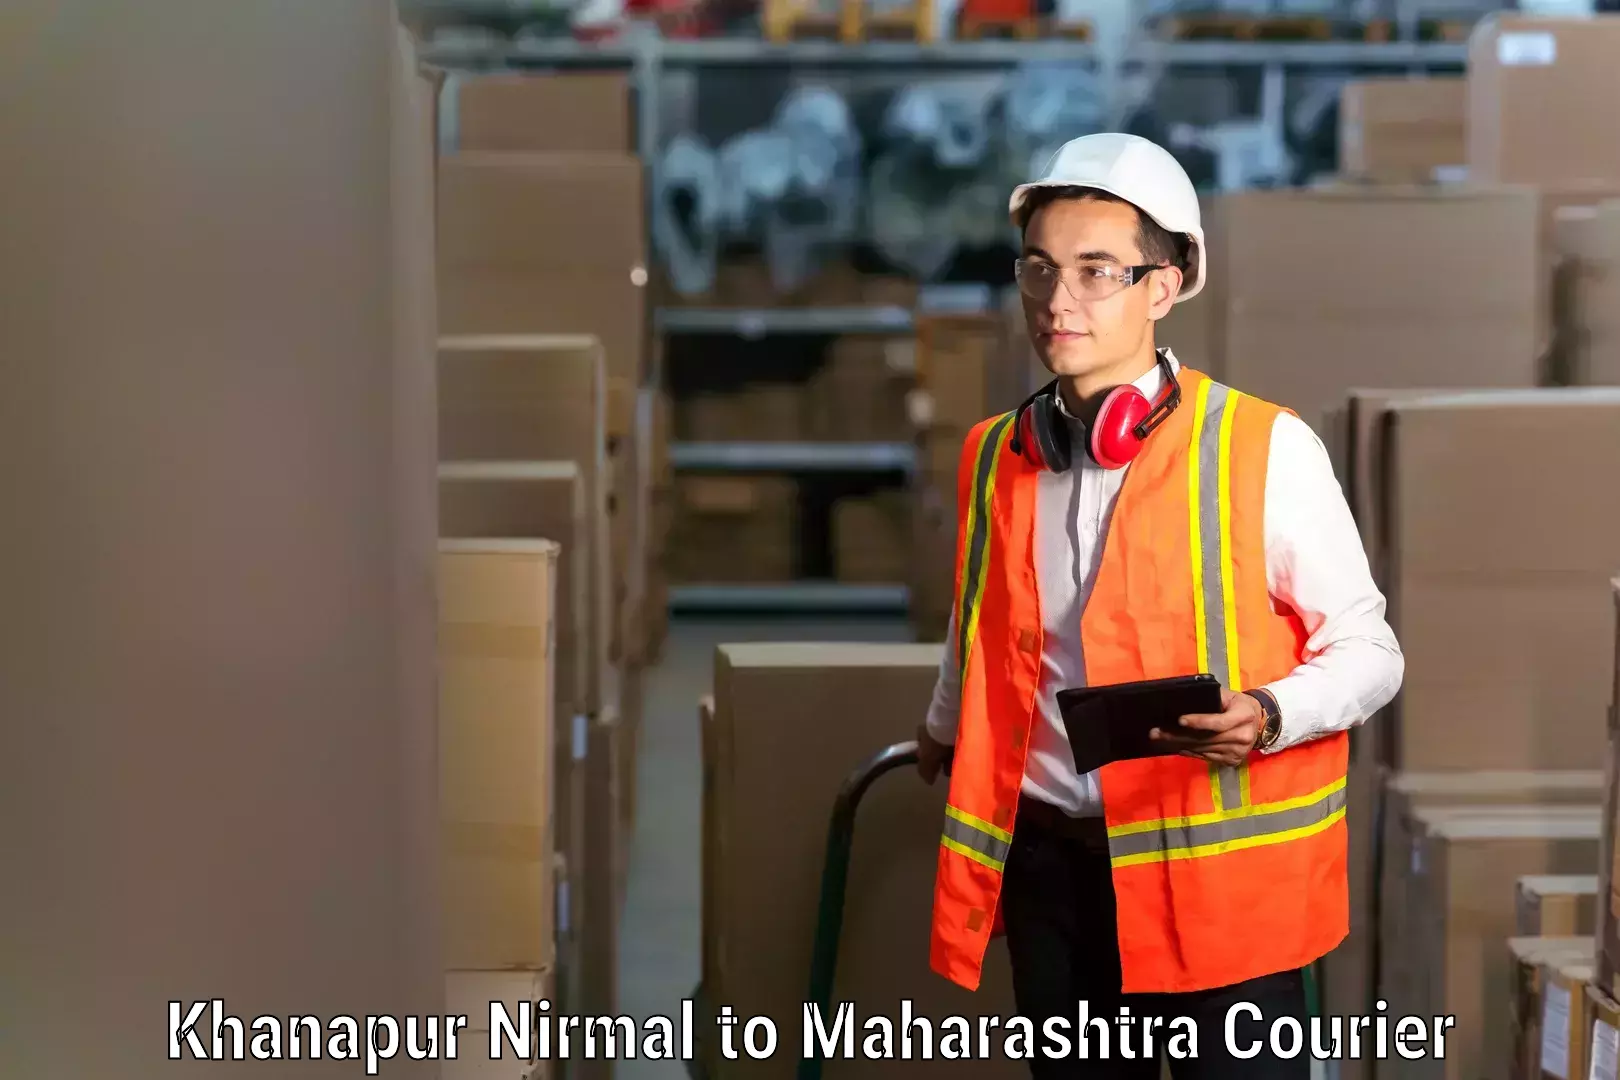 Home moving specialists Khanapur Nirmal to Maharashtra